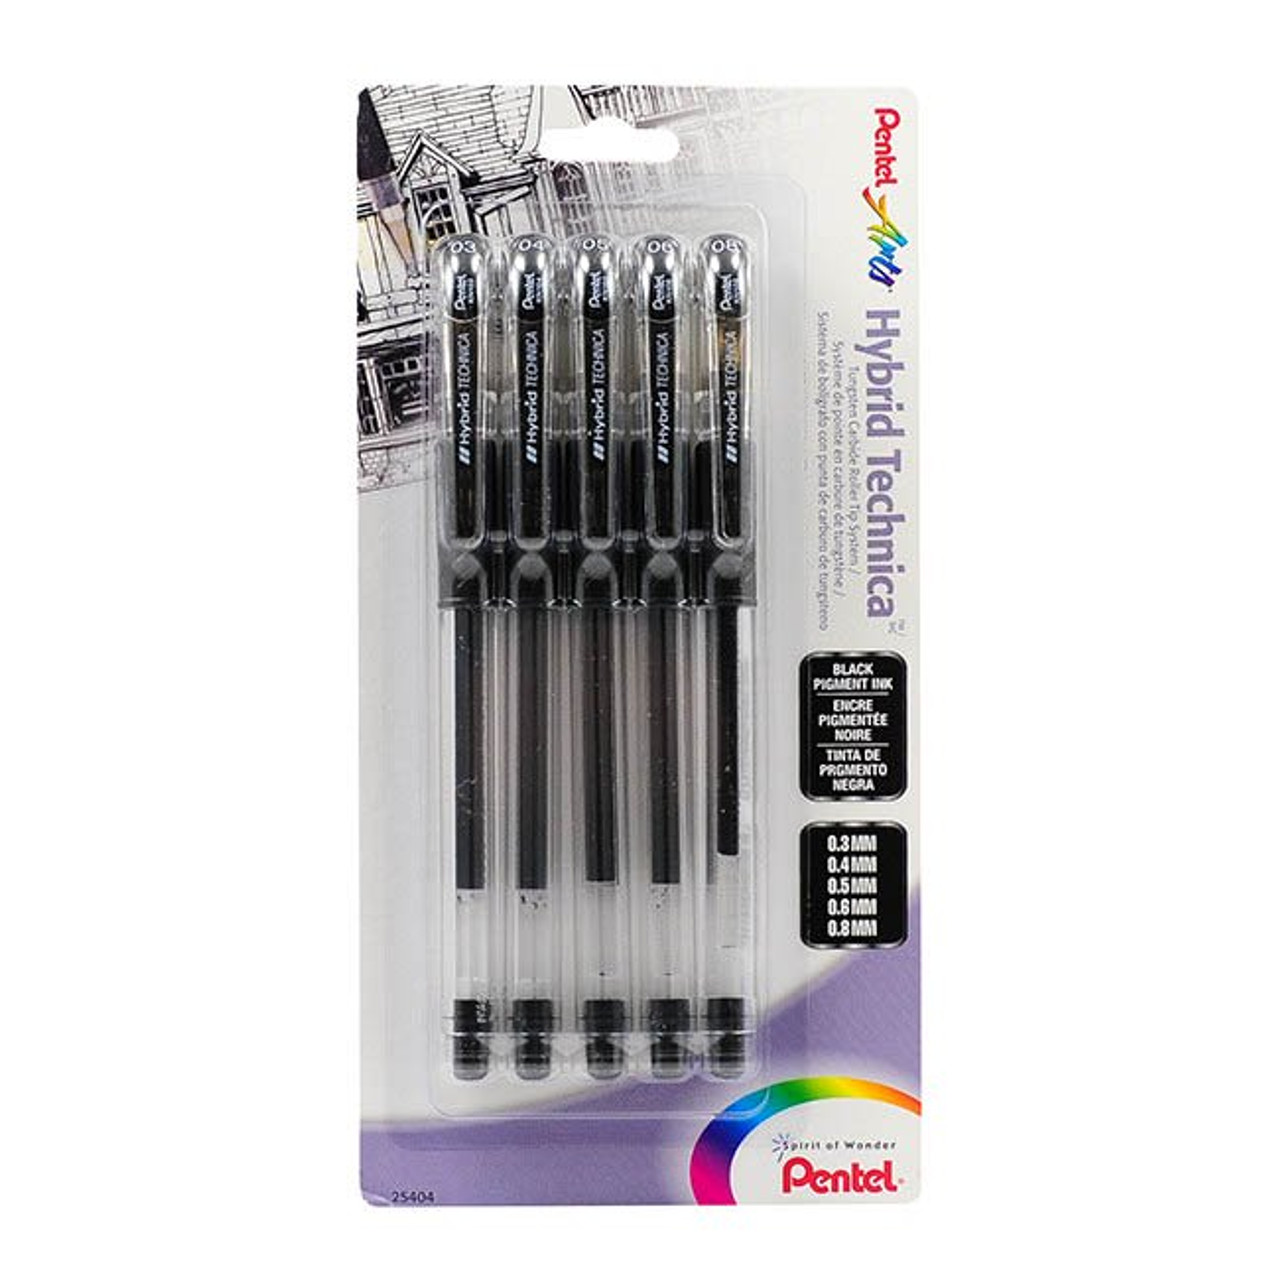 Pentel Fabric Gel Pen, Black